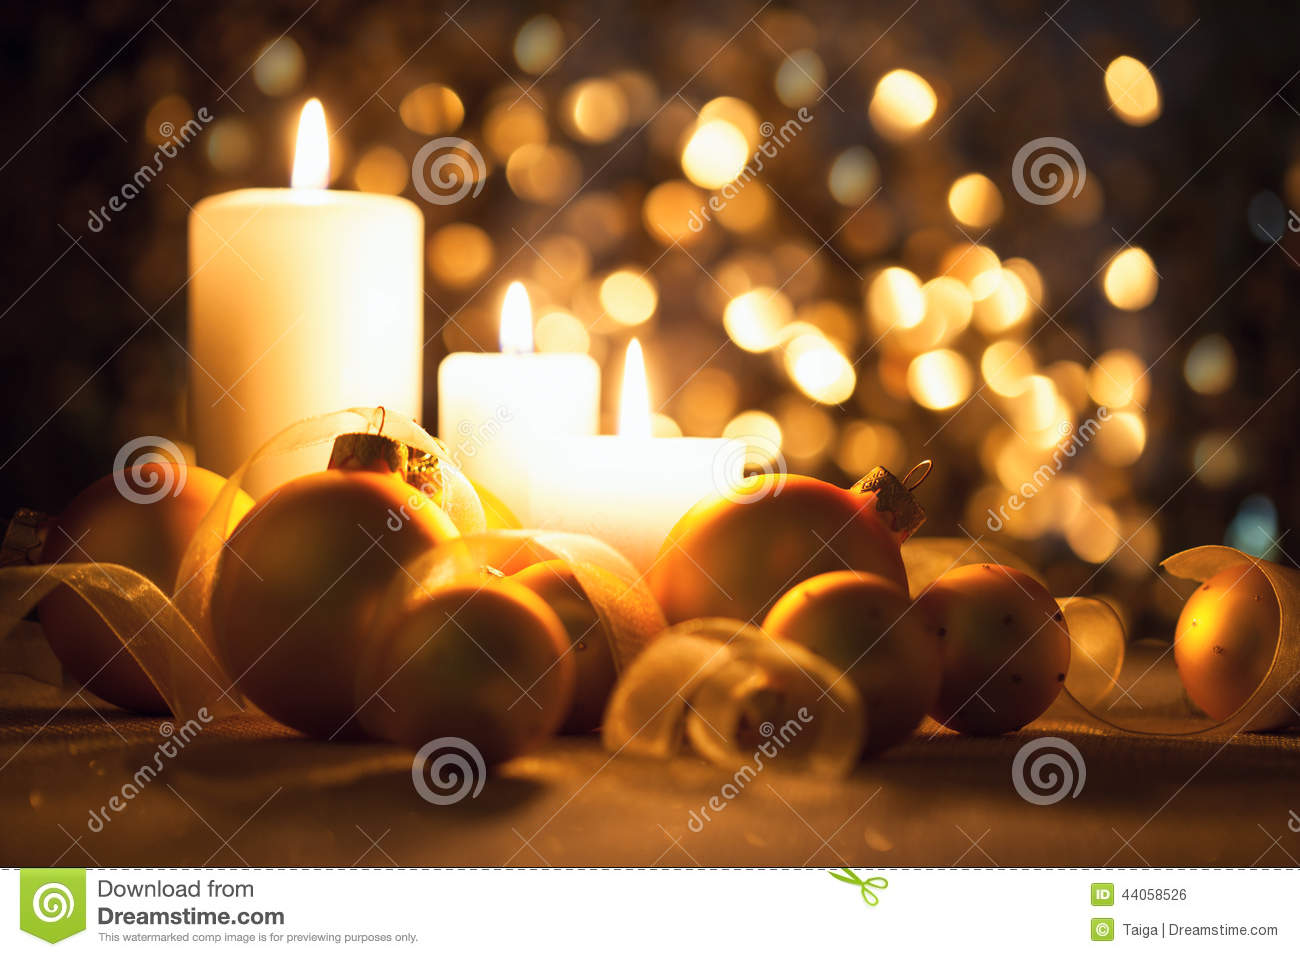 warm night christmas decoratoins image